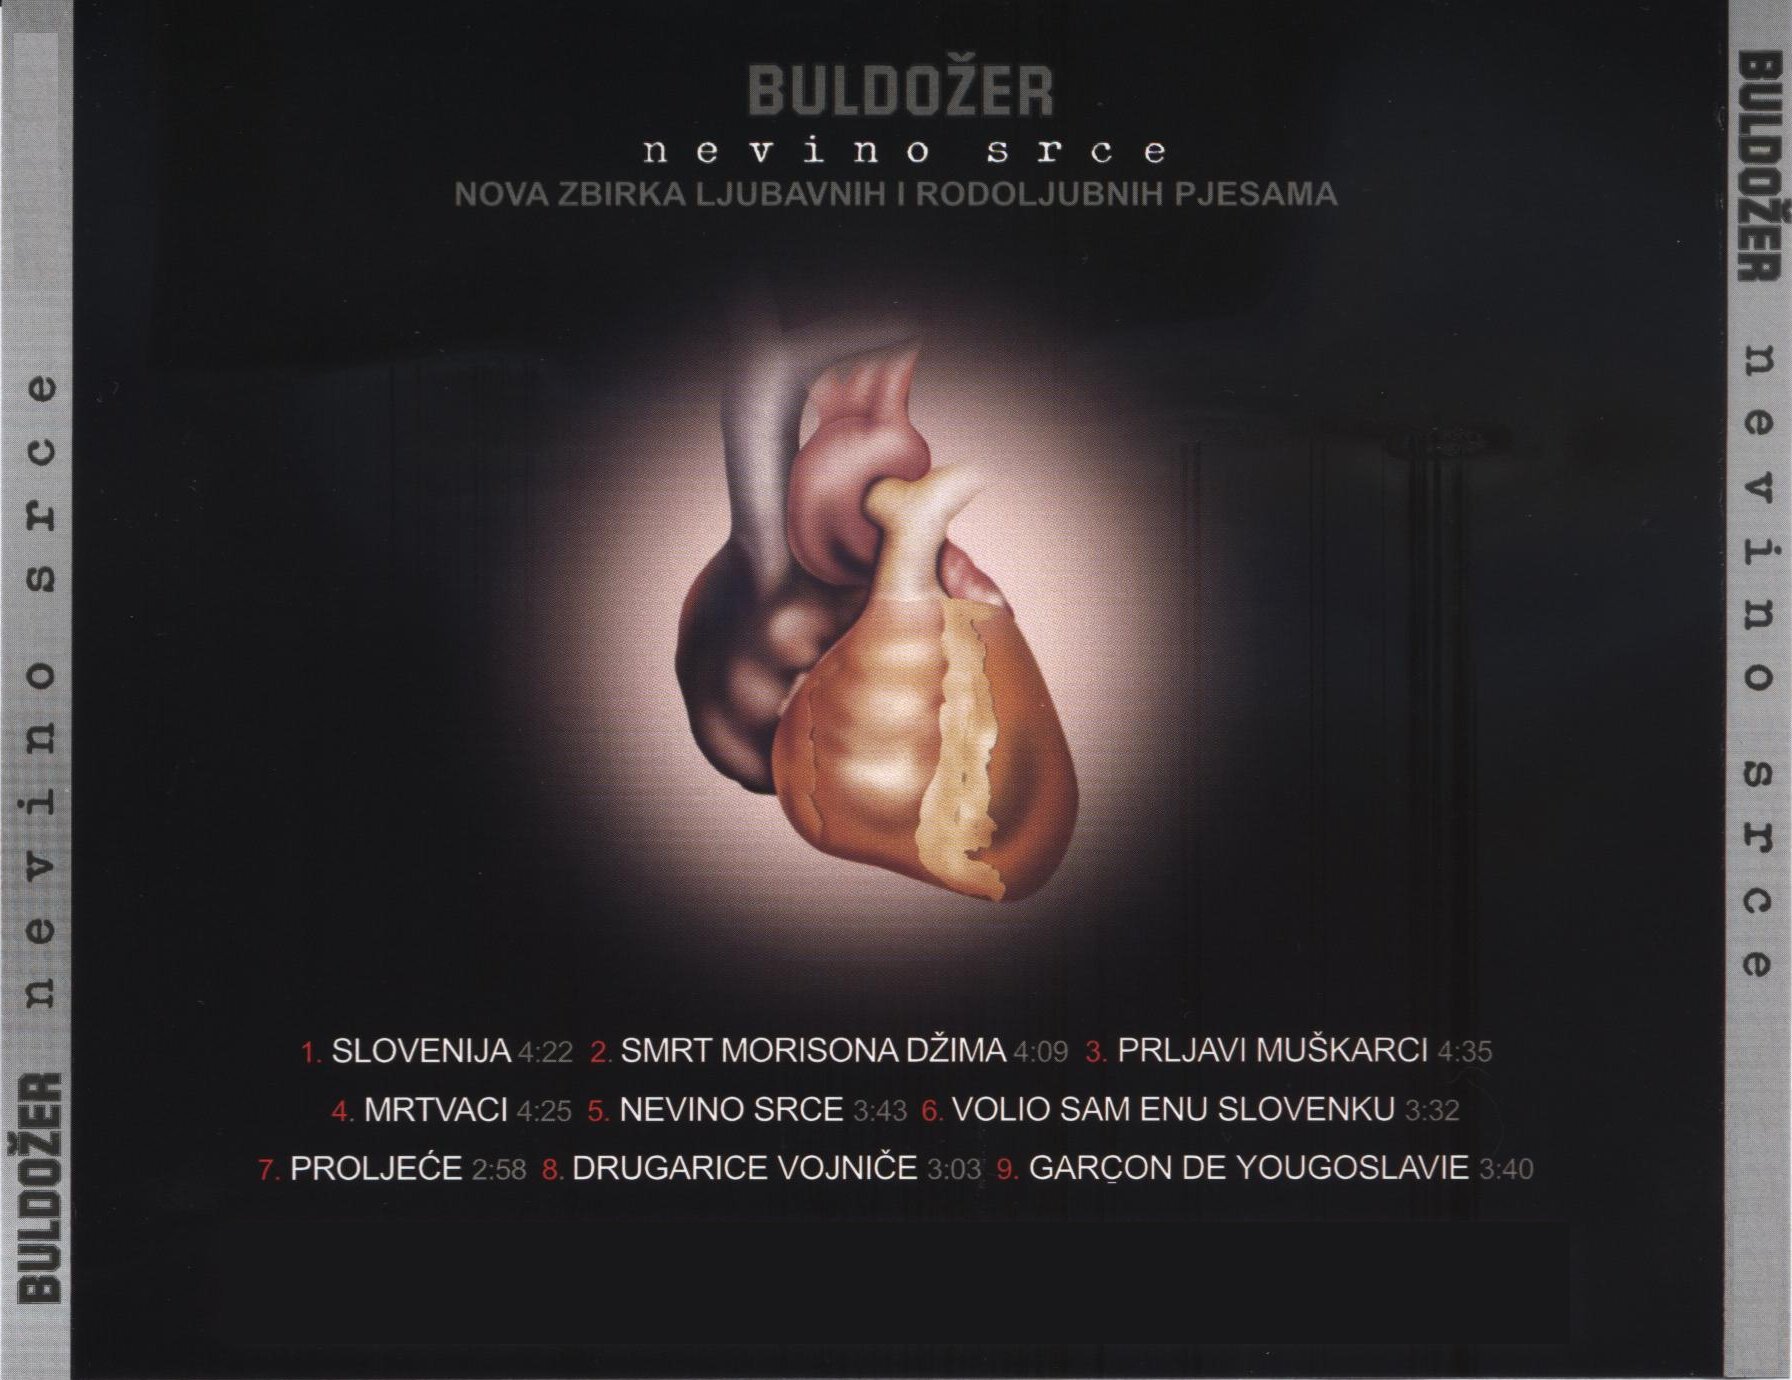 Buldozer 1983 Nevino srce b